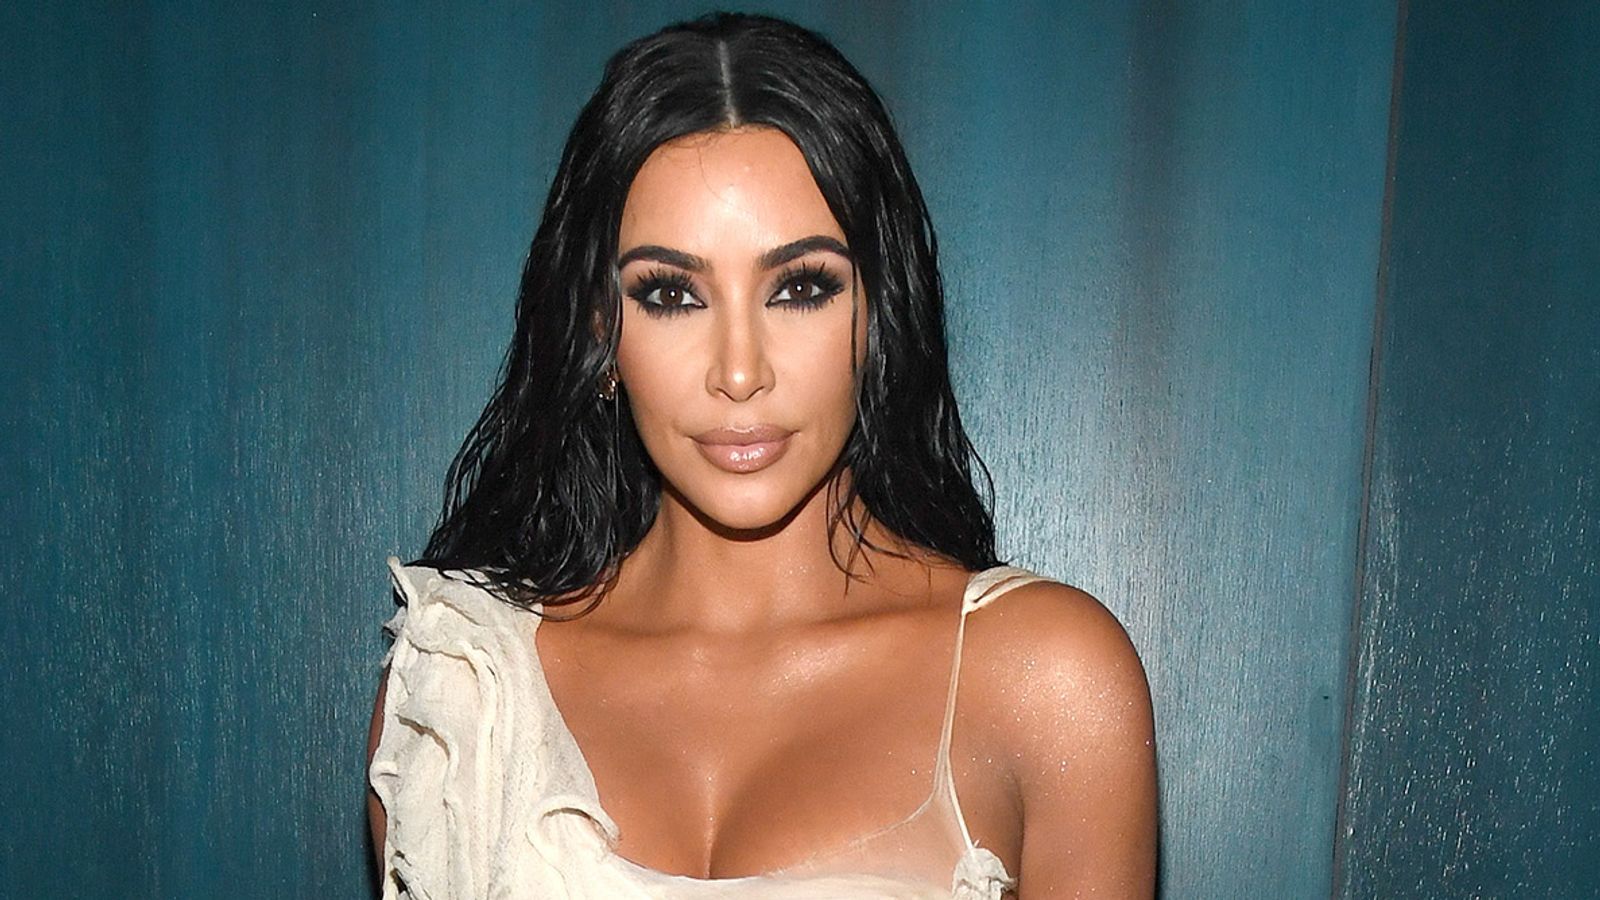 Coronavirus: Kim Kardashian offers fan a dinner date to raise